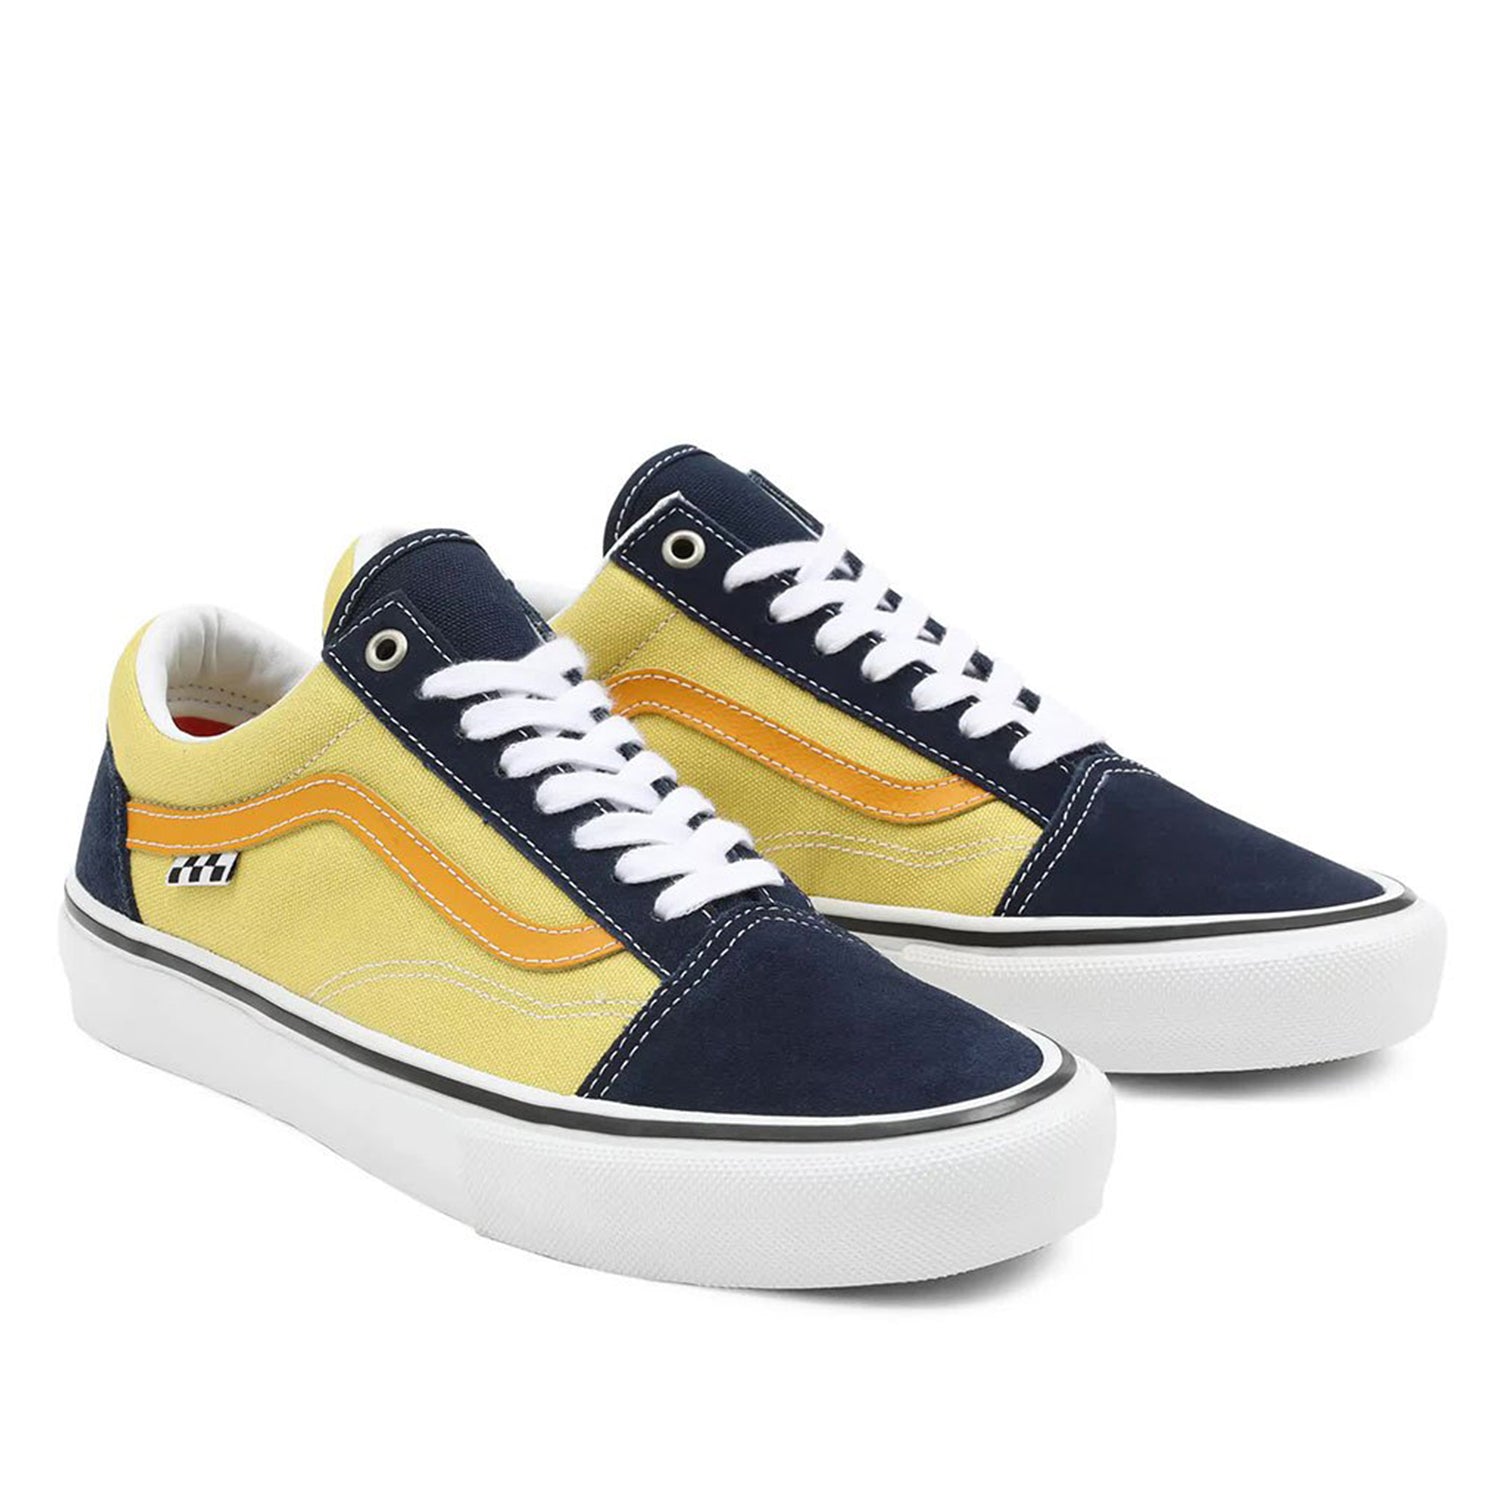 Vans Old Skool Skate Shoe - Navy / White